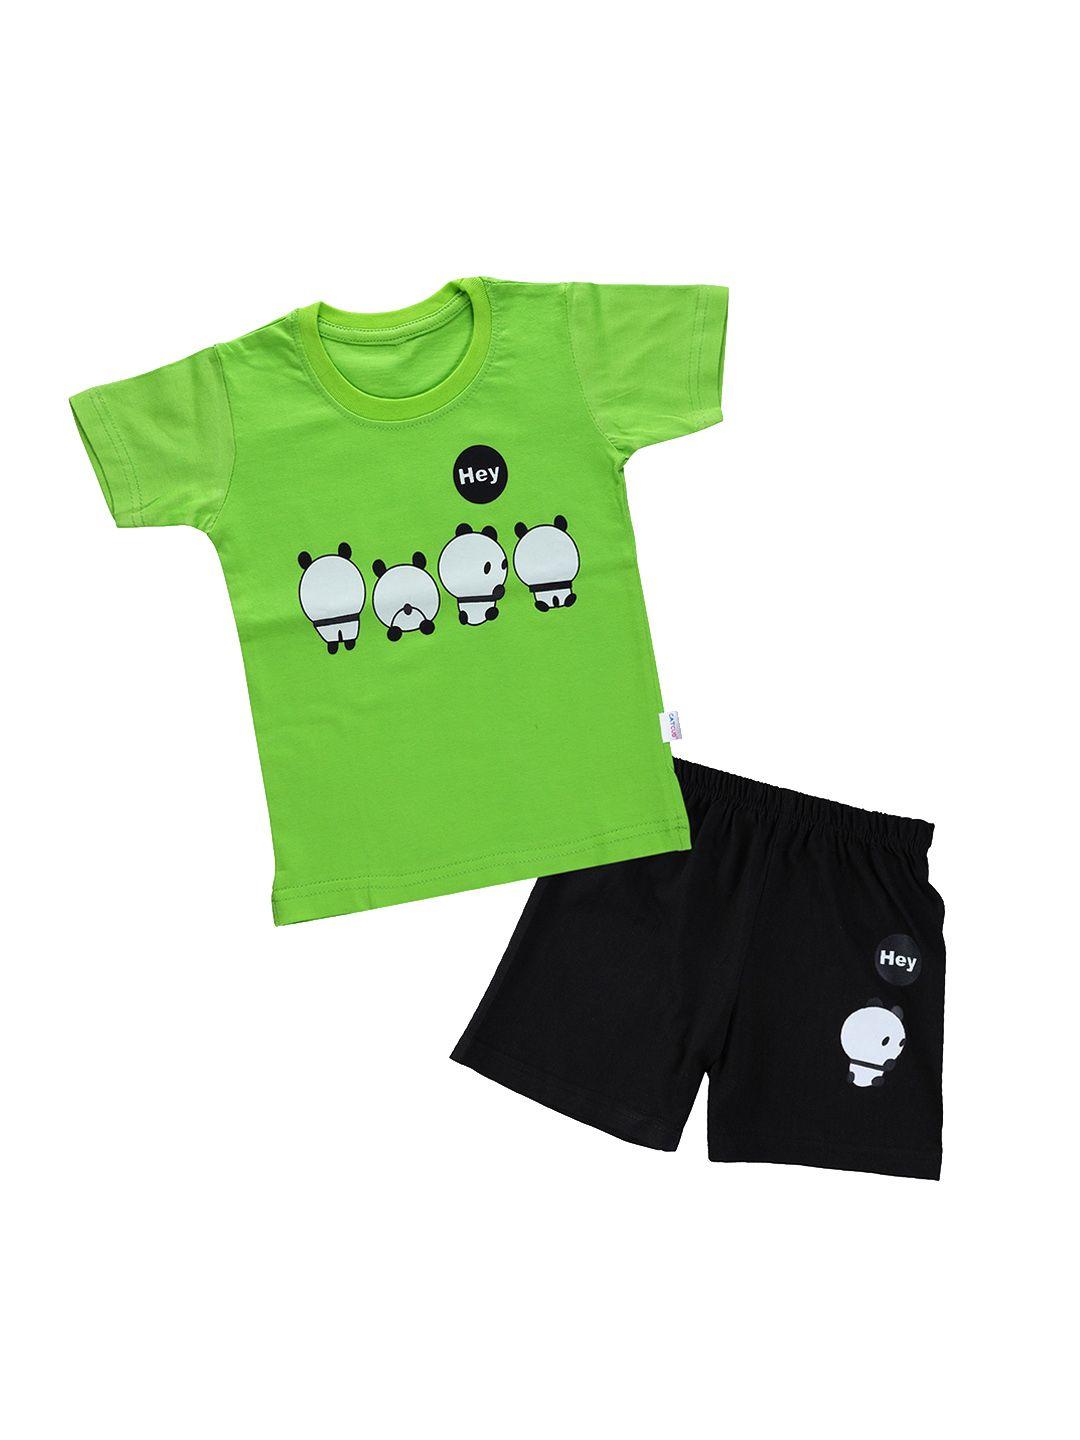 CATCUB Unisex Kids Green Clothing Set